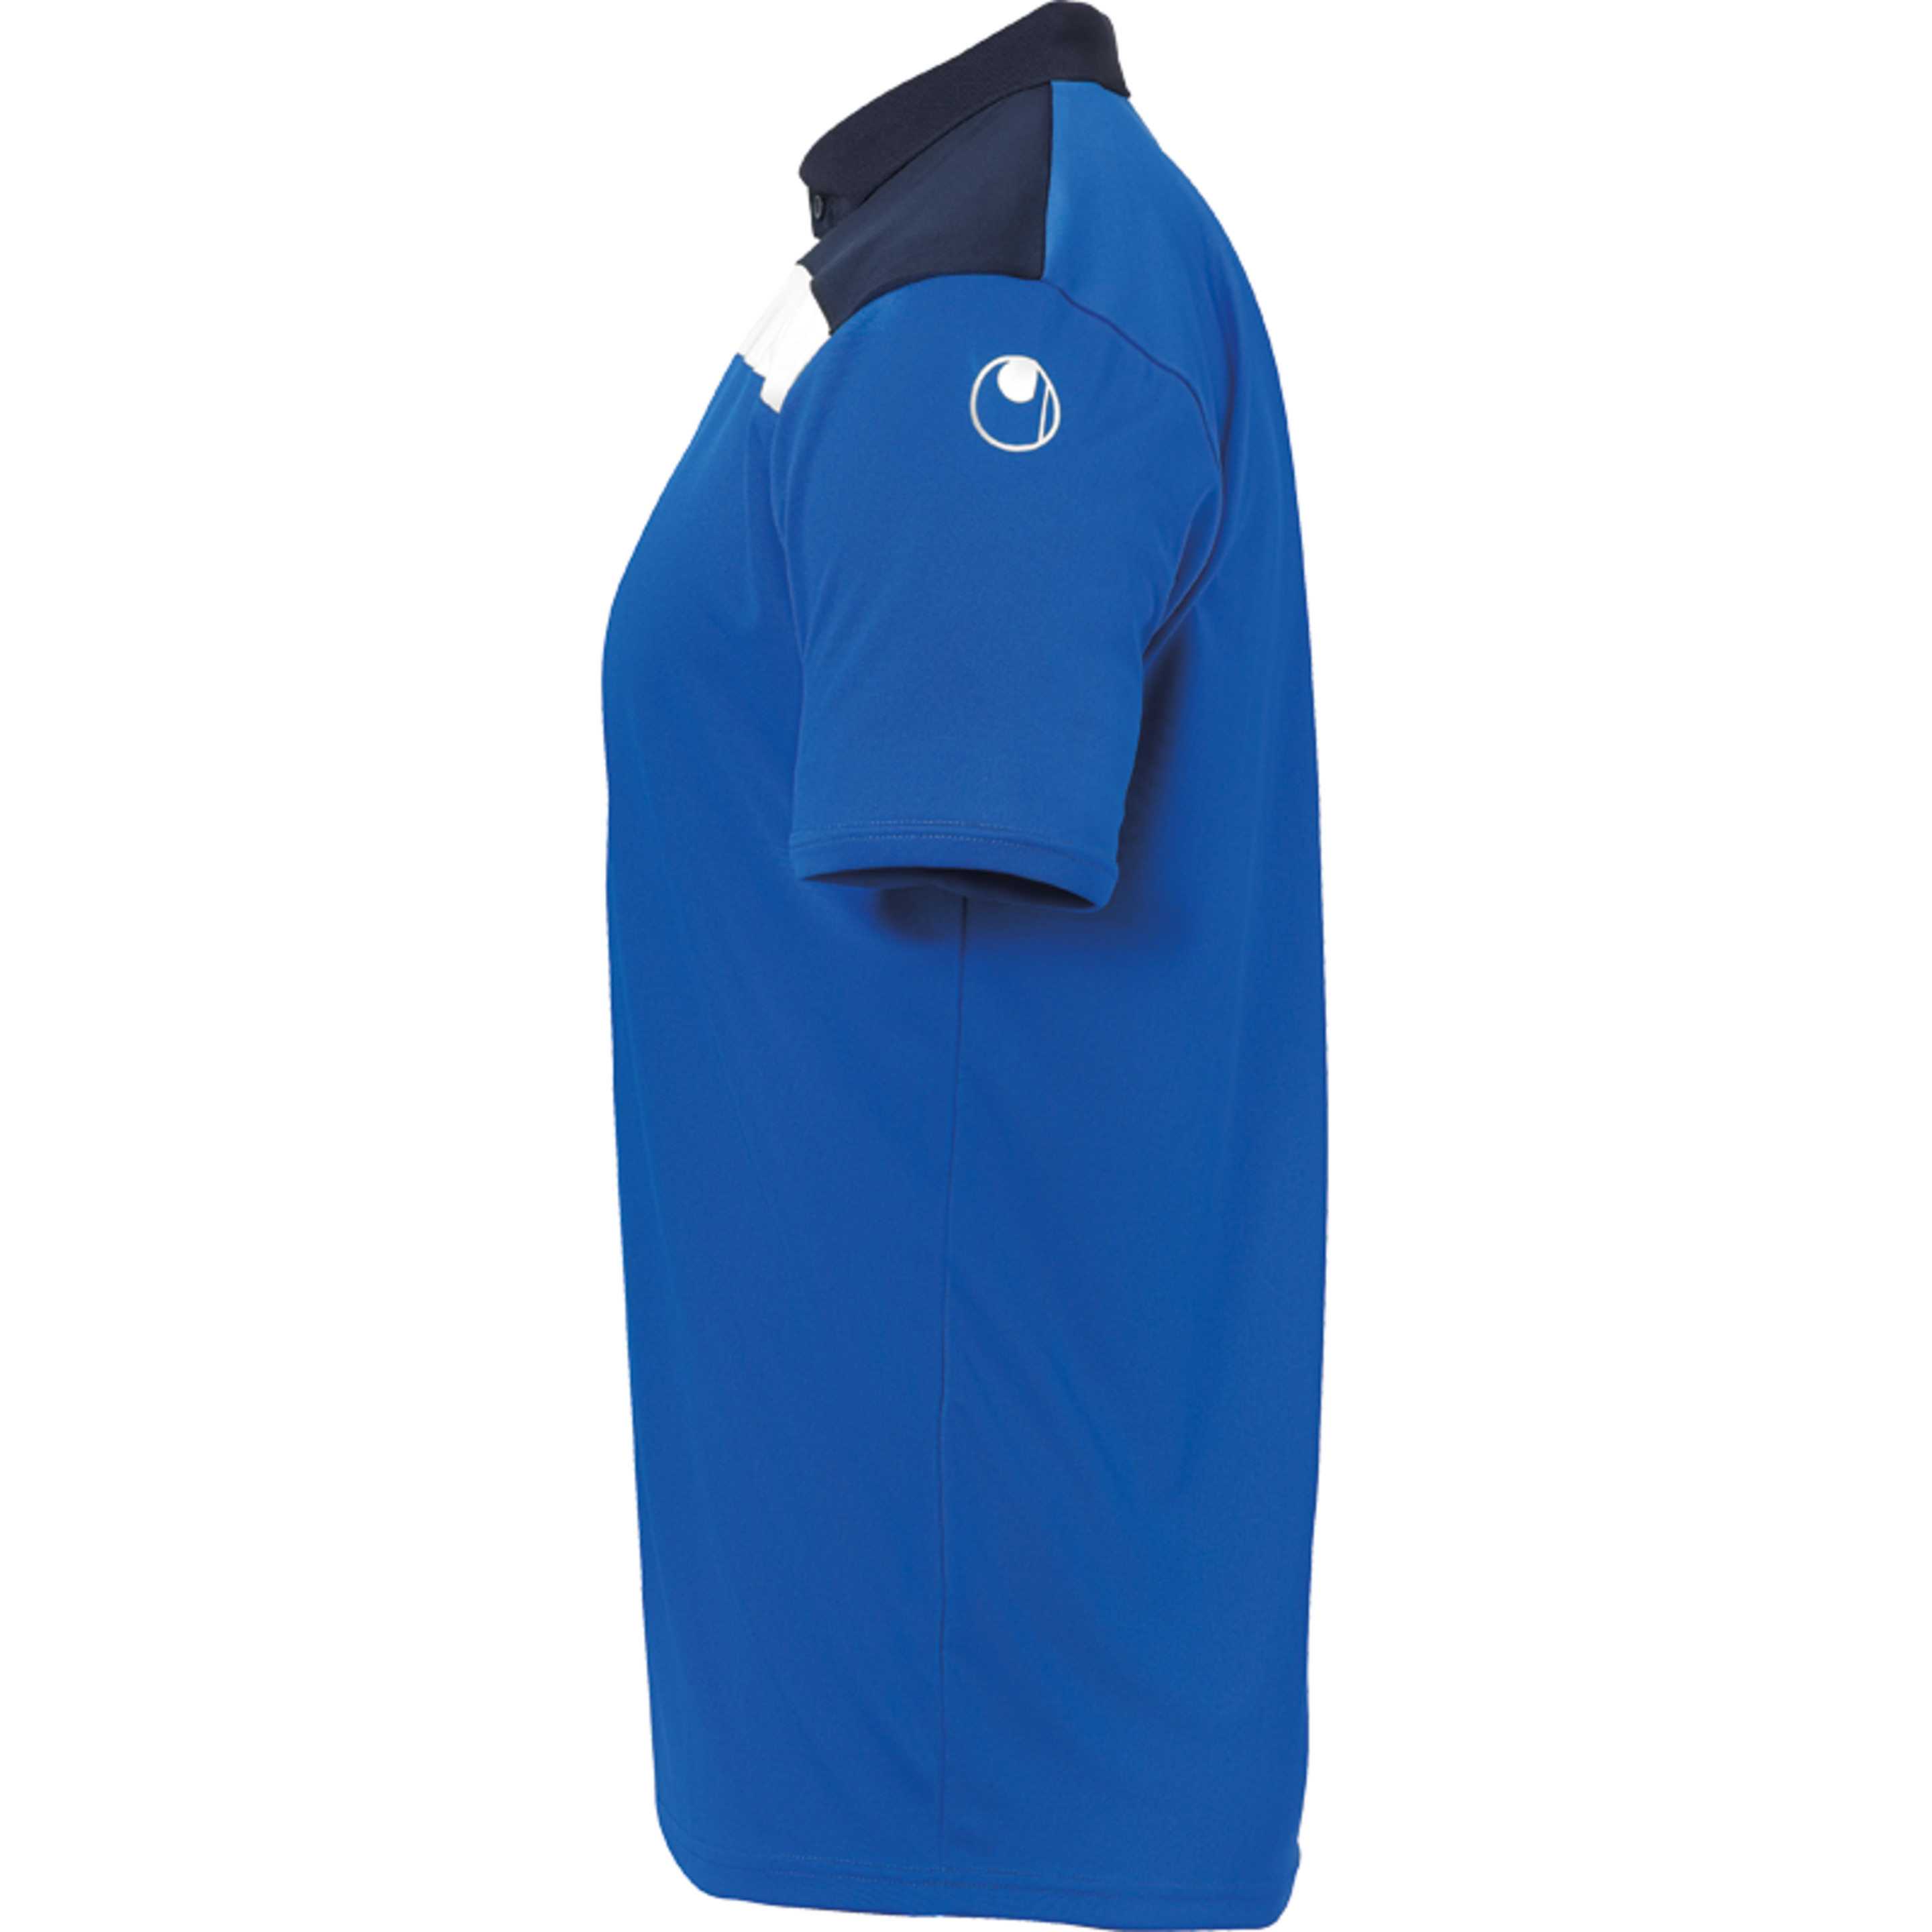 Offense 23 Polo Shirt Azur/azul Marino/blanco Uhlsport